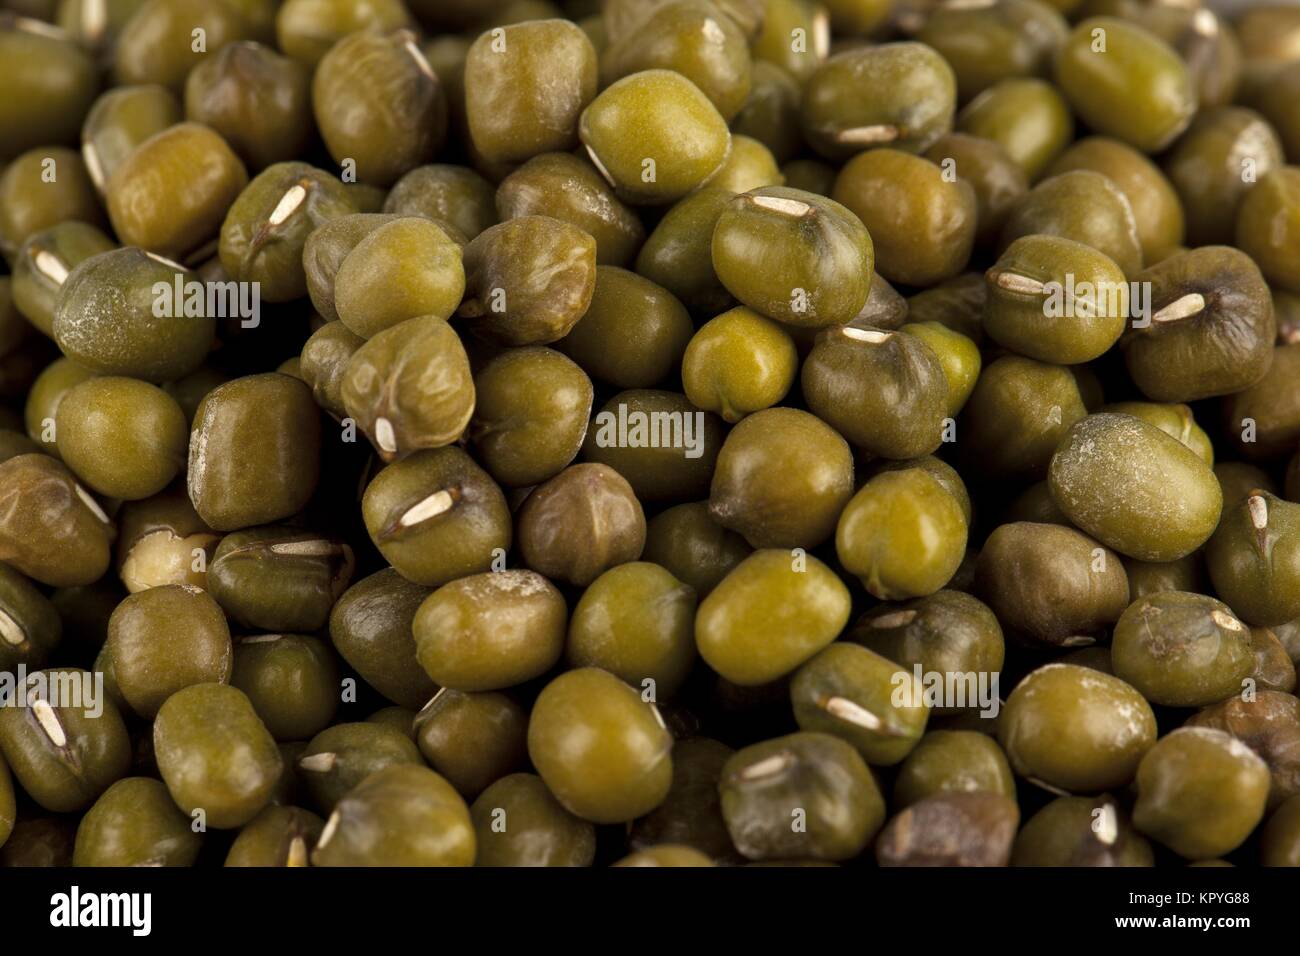 mung beans Stock Photo